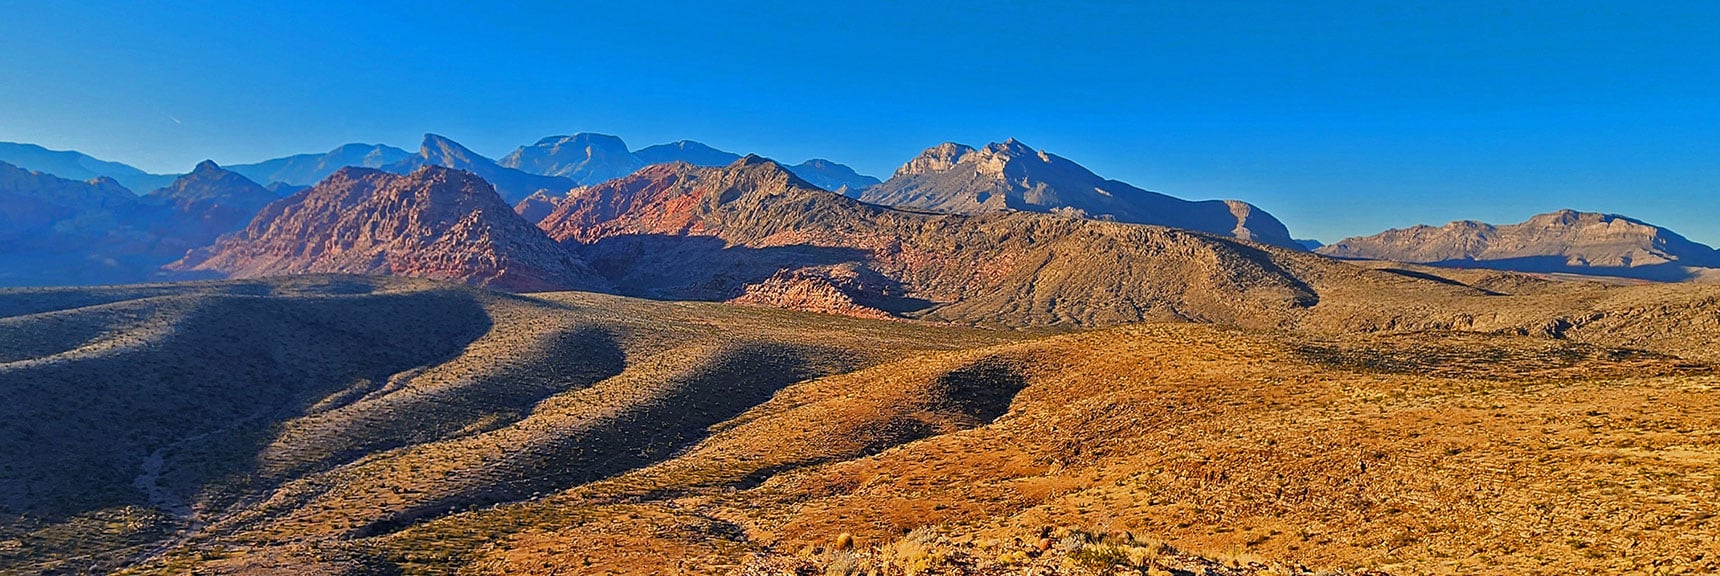 Right to Left: Damsel Peak, Gray Cap Ridge, La Madre Mts., Turtlehead Peak, Kraft Mt. | Brownstone Trail | Calico Basin | Brownstone Basin | La Madre Mountains Wilderness, Nevada